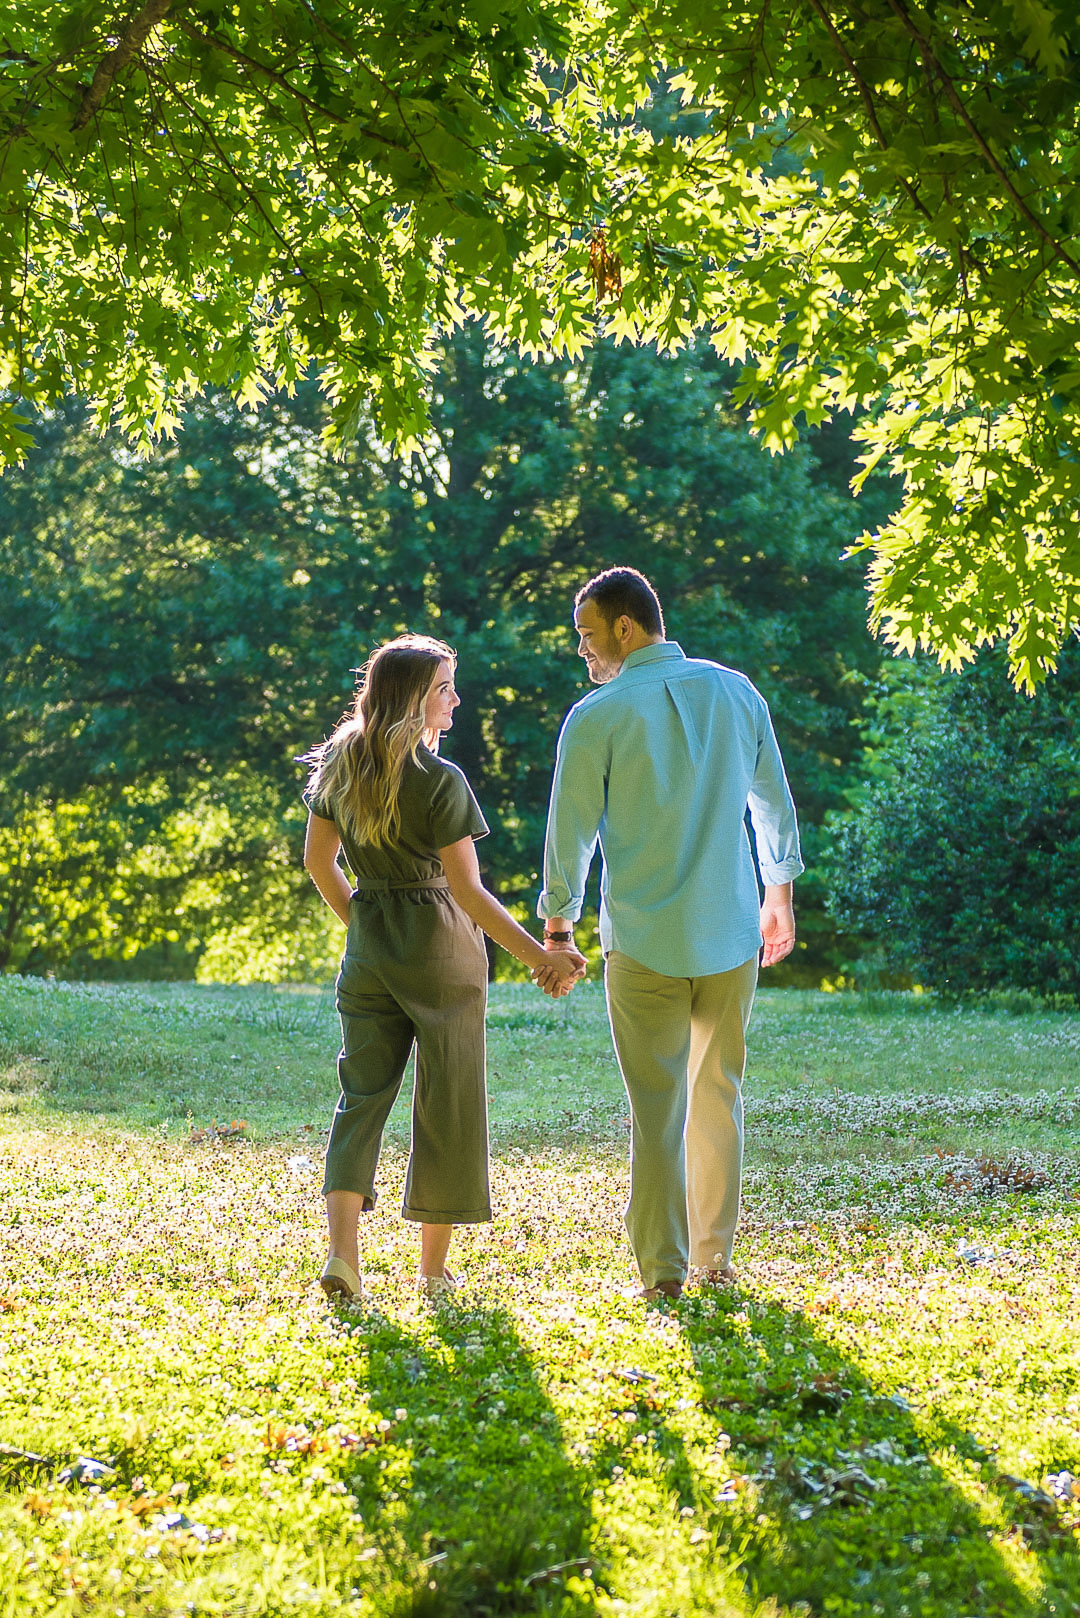 Proposal Engagement Photos taken at Piedmont Park in Atlanta, GA – Fulton County.